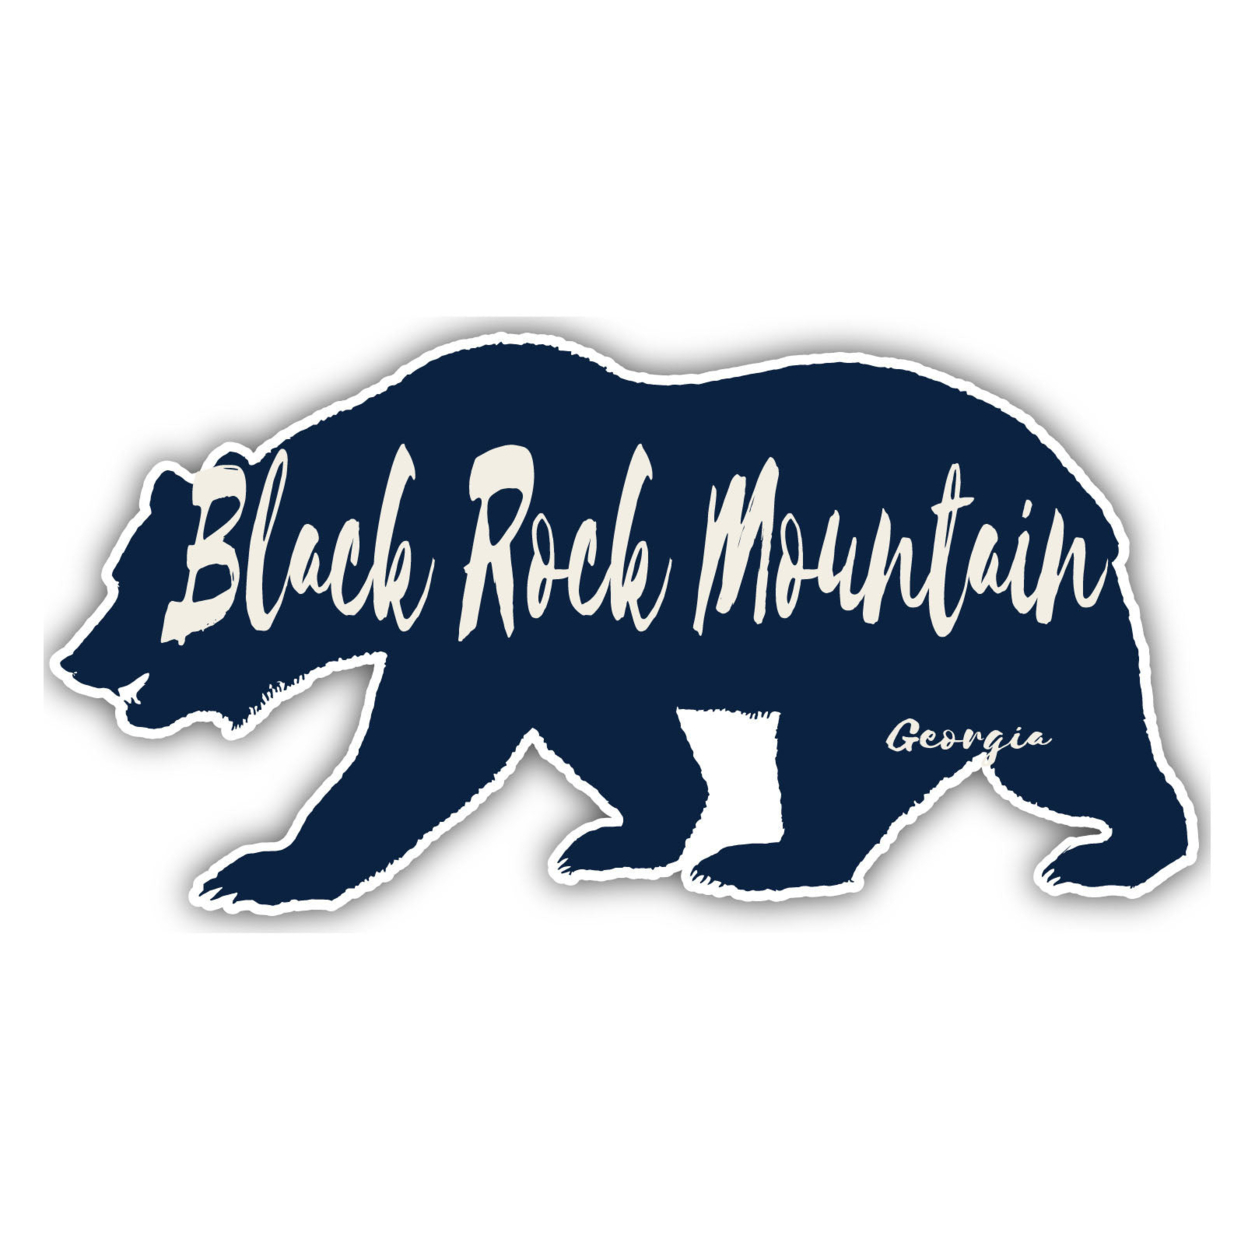 Black Rock Mountain Georgia Souvenir Decorative Stickers (Choose Theme And Size) - 4-Pack, 4-Inch, Bear